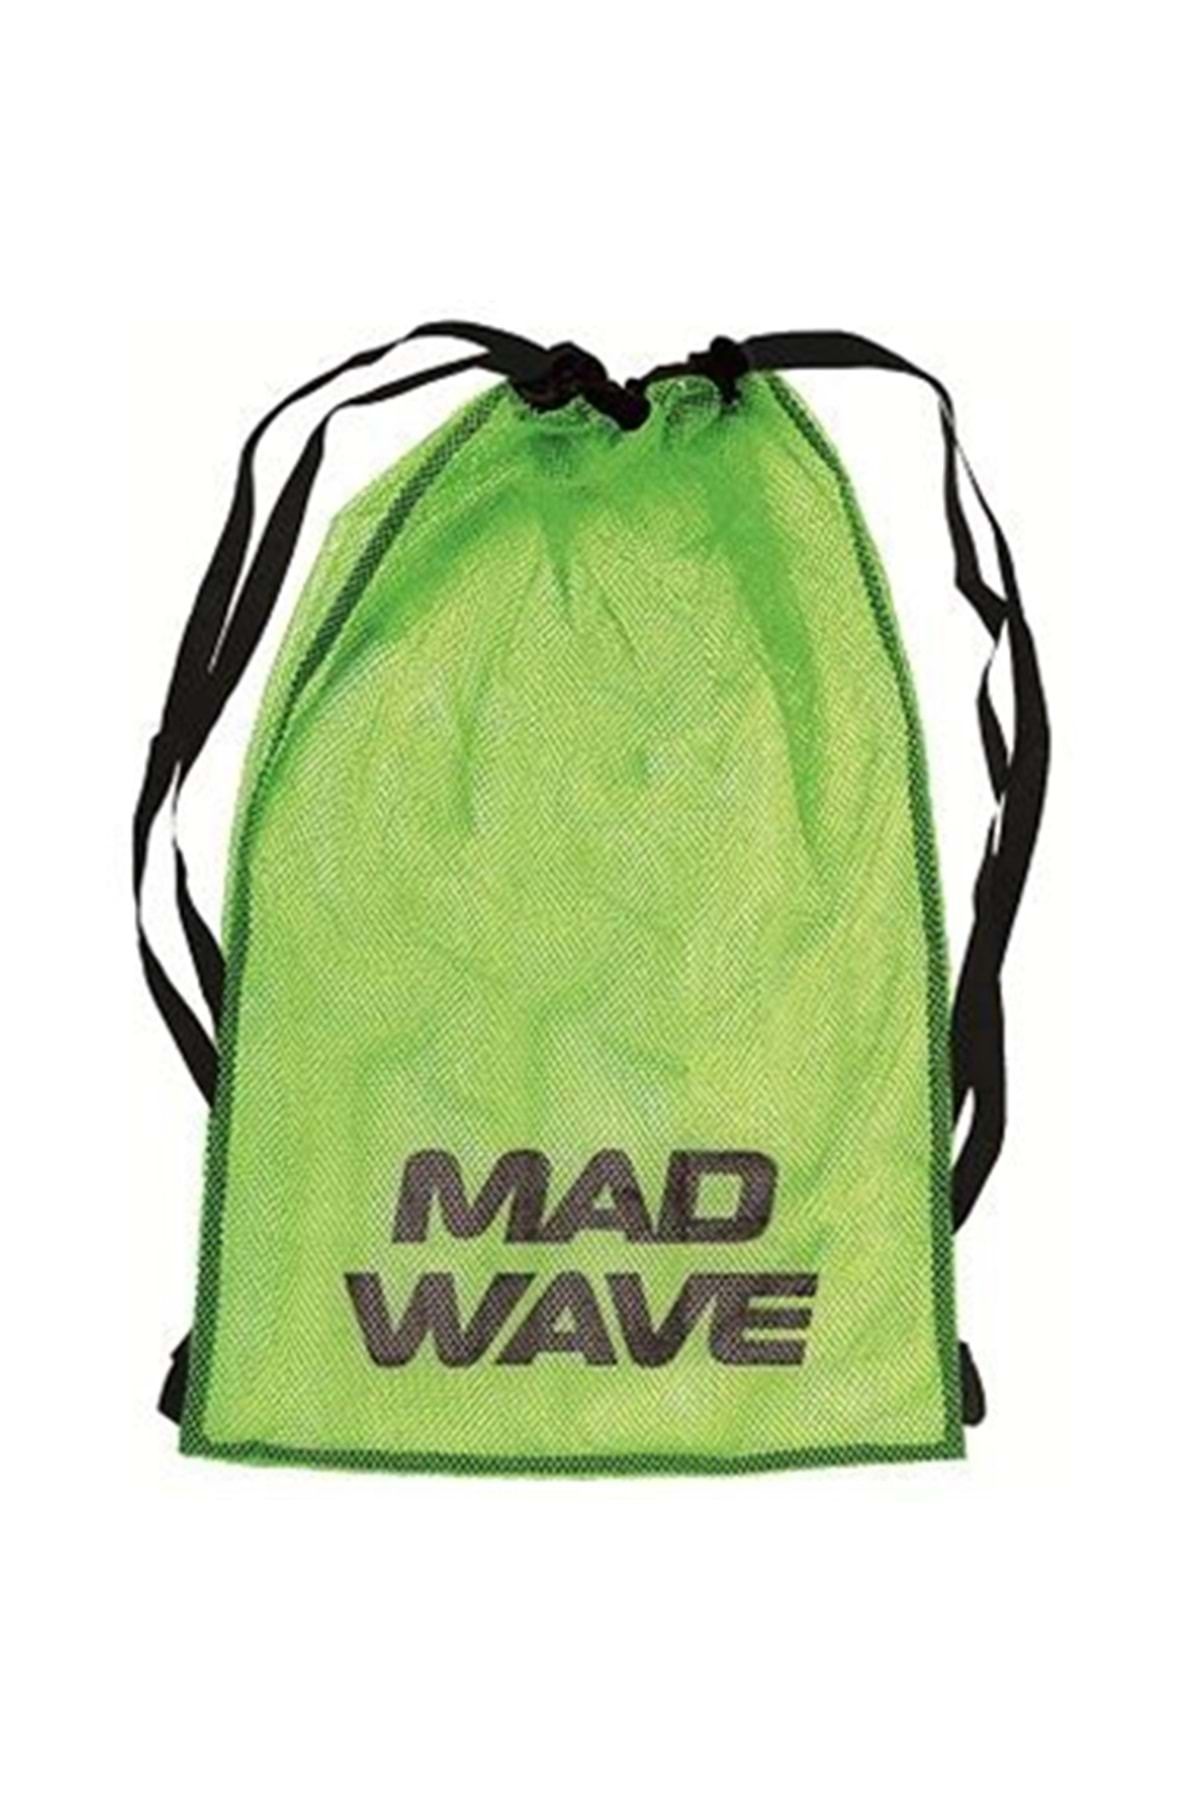 Mad Wave Madwave Sack Dry Mesh Bag, 65x50 Yeşil File Çanta